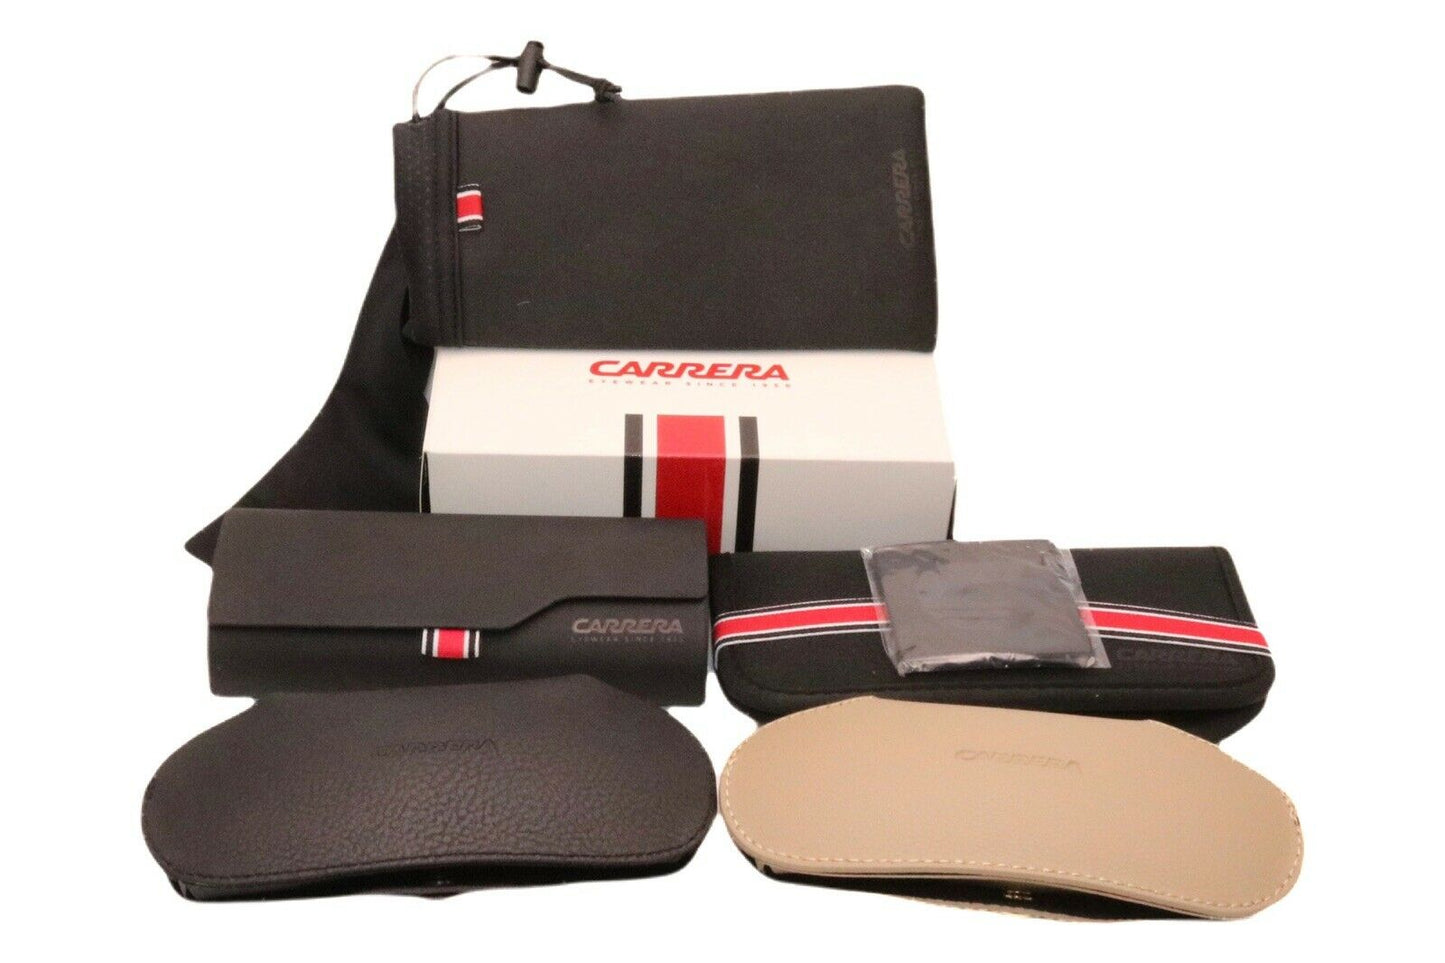 Carrera CARRERA 8859-0086 56mm New Eyeglasses